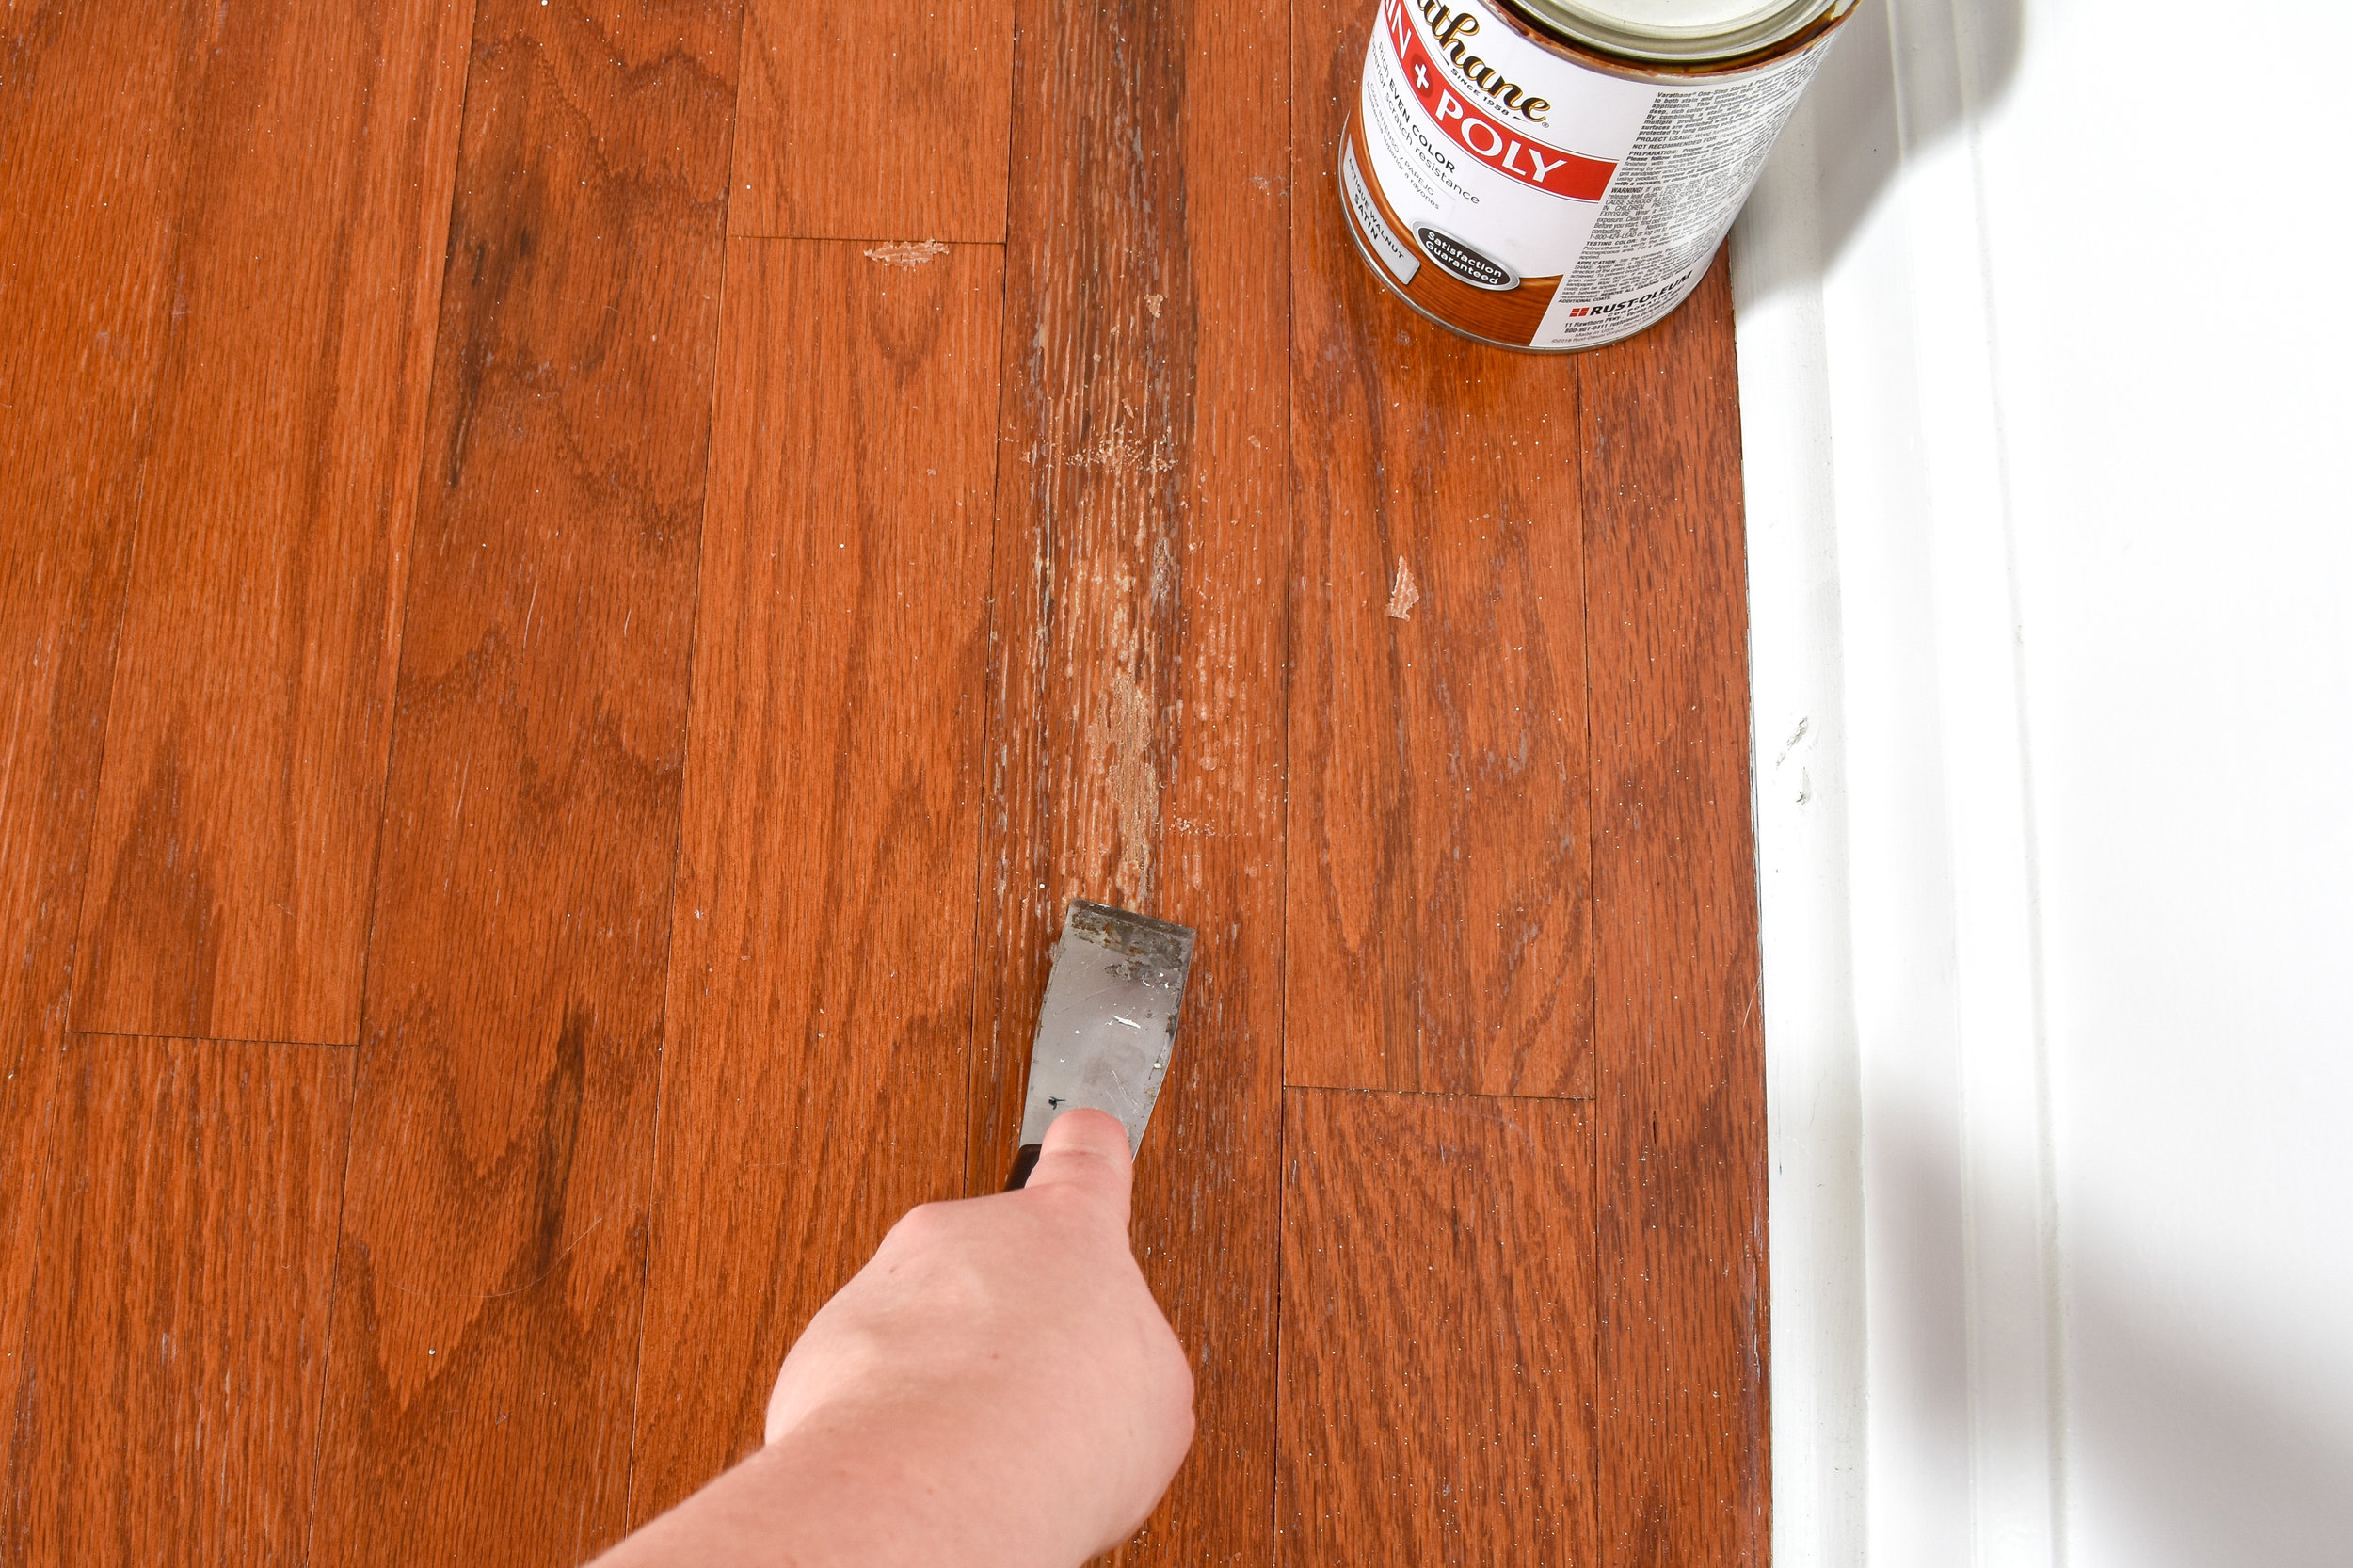 How To Make Old Hardwood Floors Shine, How To Make Hardwood Floors Look Better